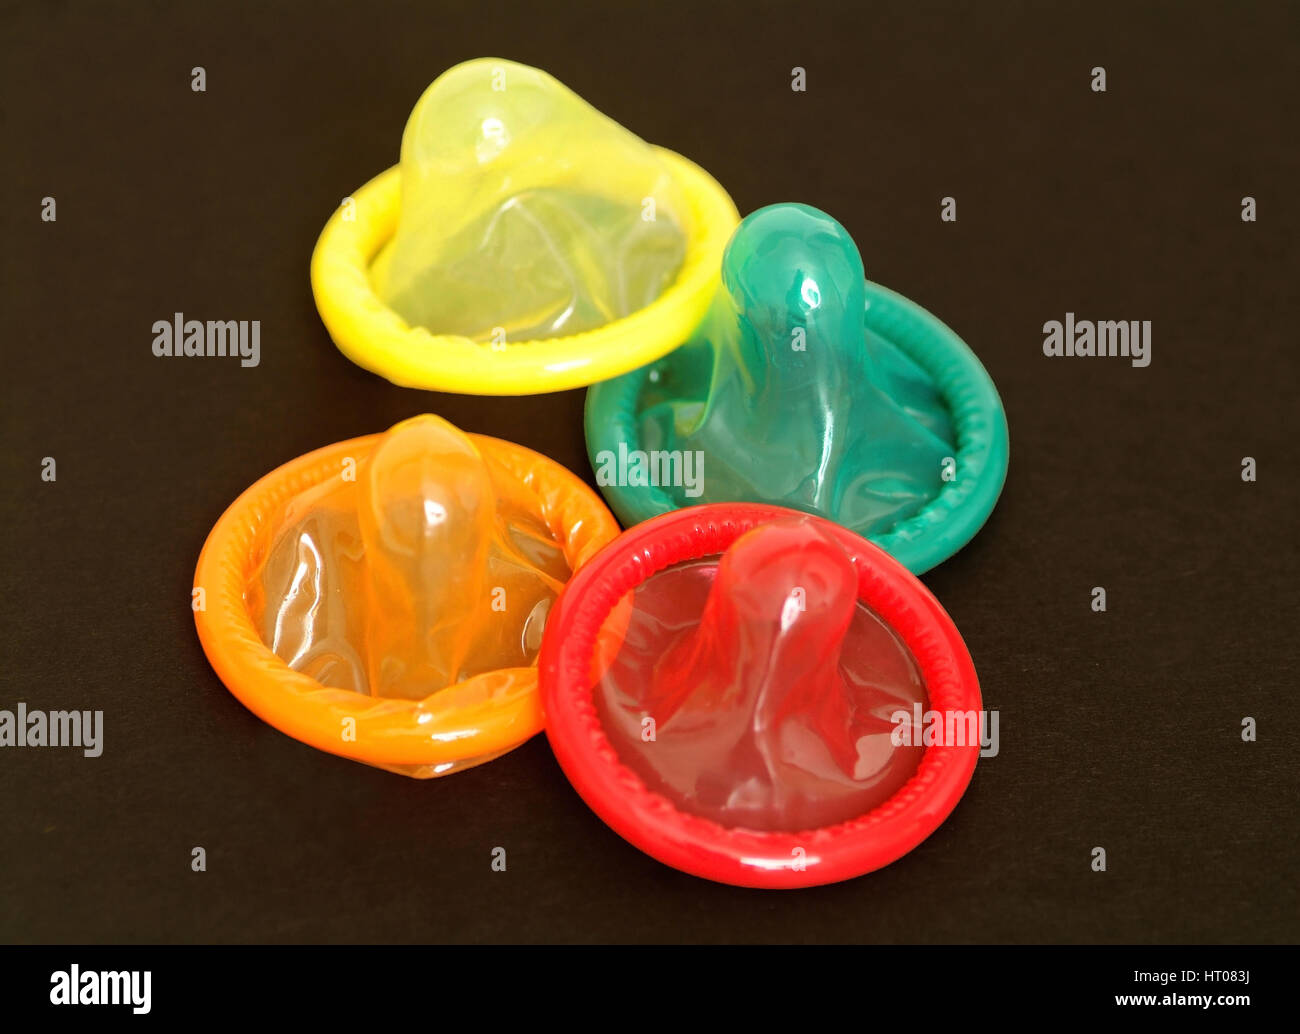 Kondome - condoms Stock Photo